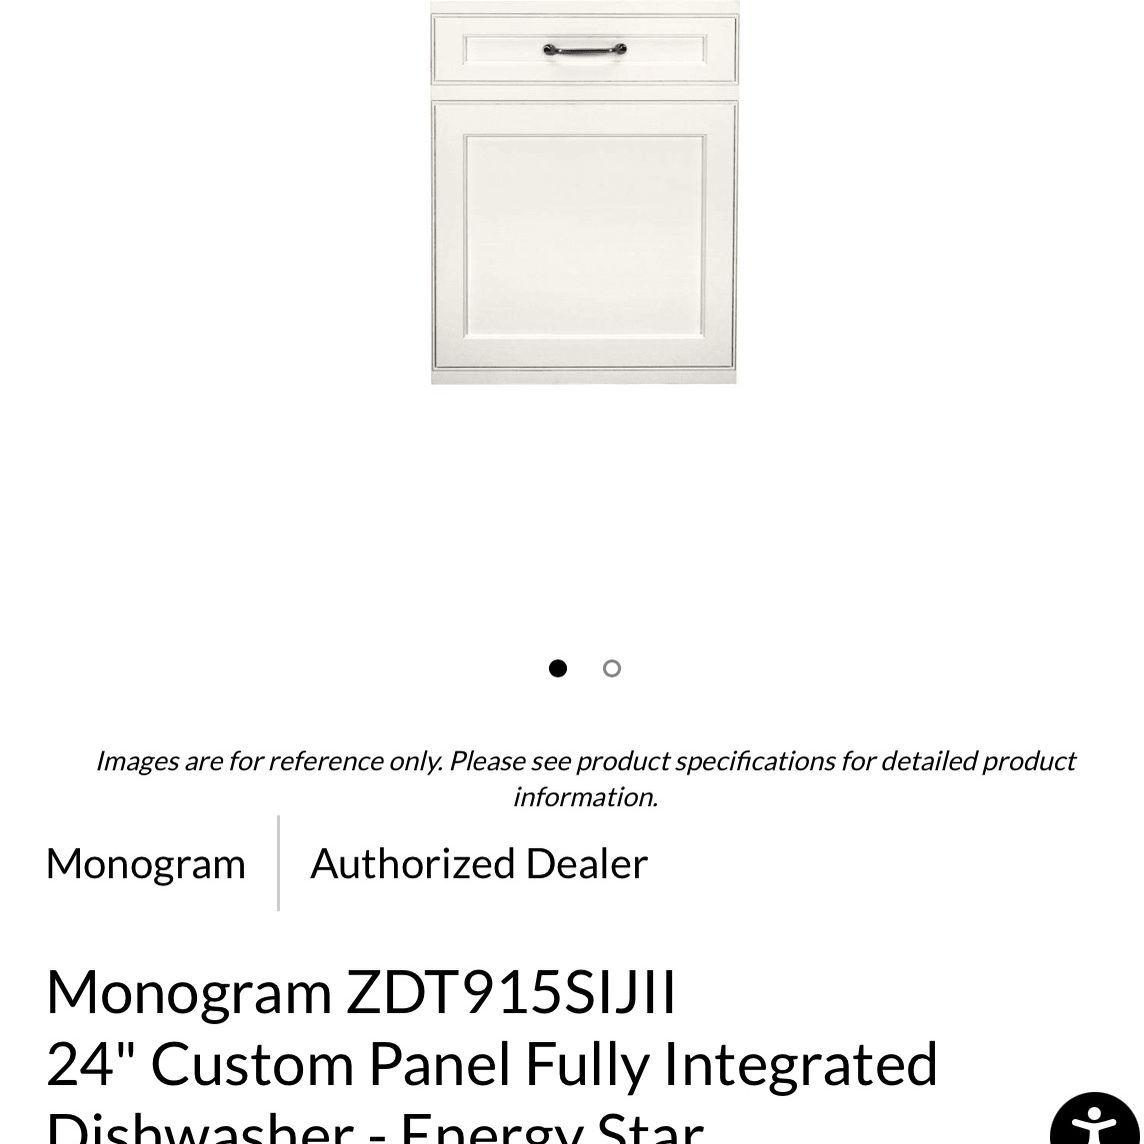 GE Monogram ZDT915SIJII 24" Custom Panel Fully Integrated Dishwasher - Energy Star